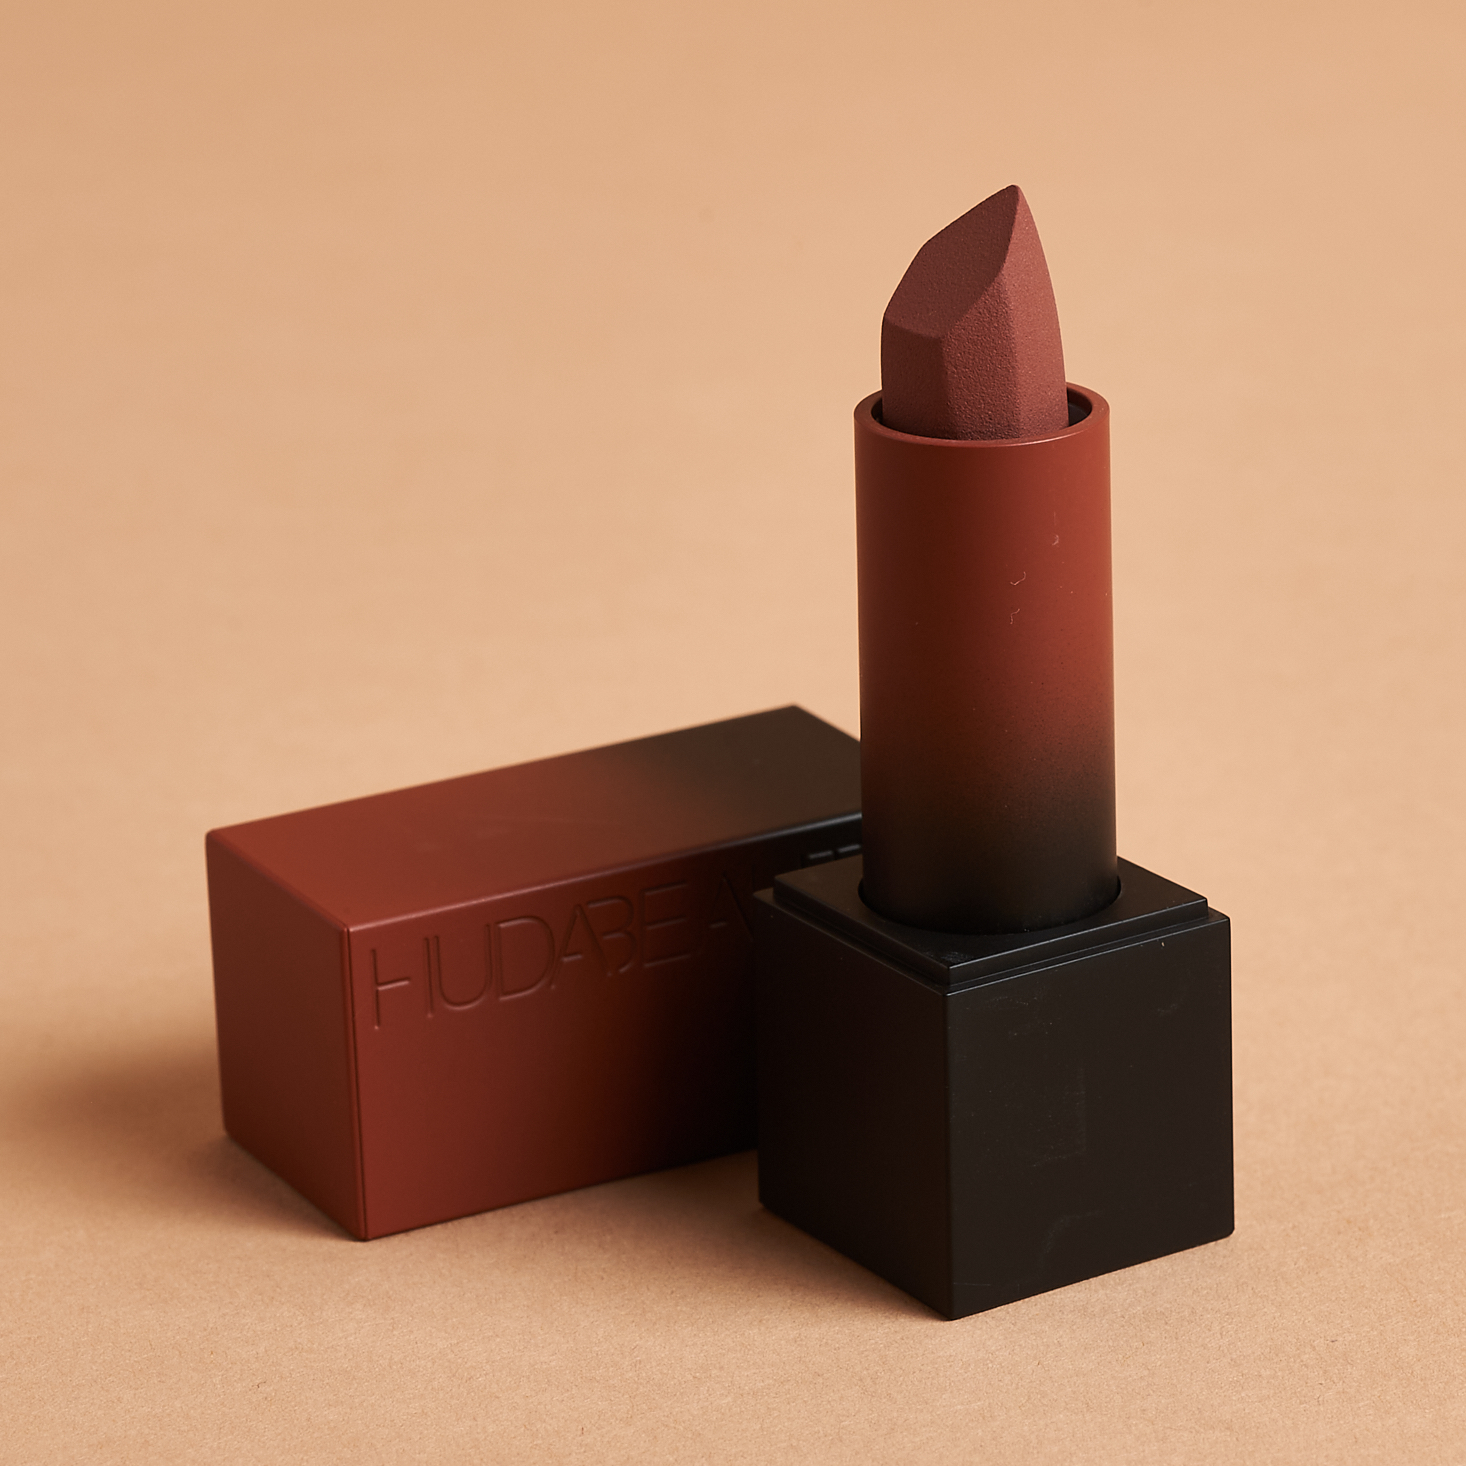 Sephora Favorites Makeup Must Haves September 2020 Huda Beauty lipstick